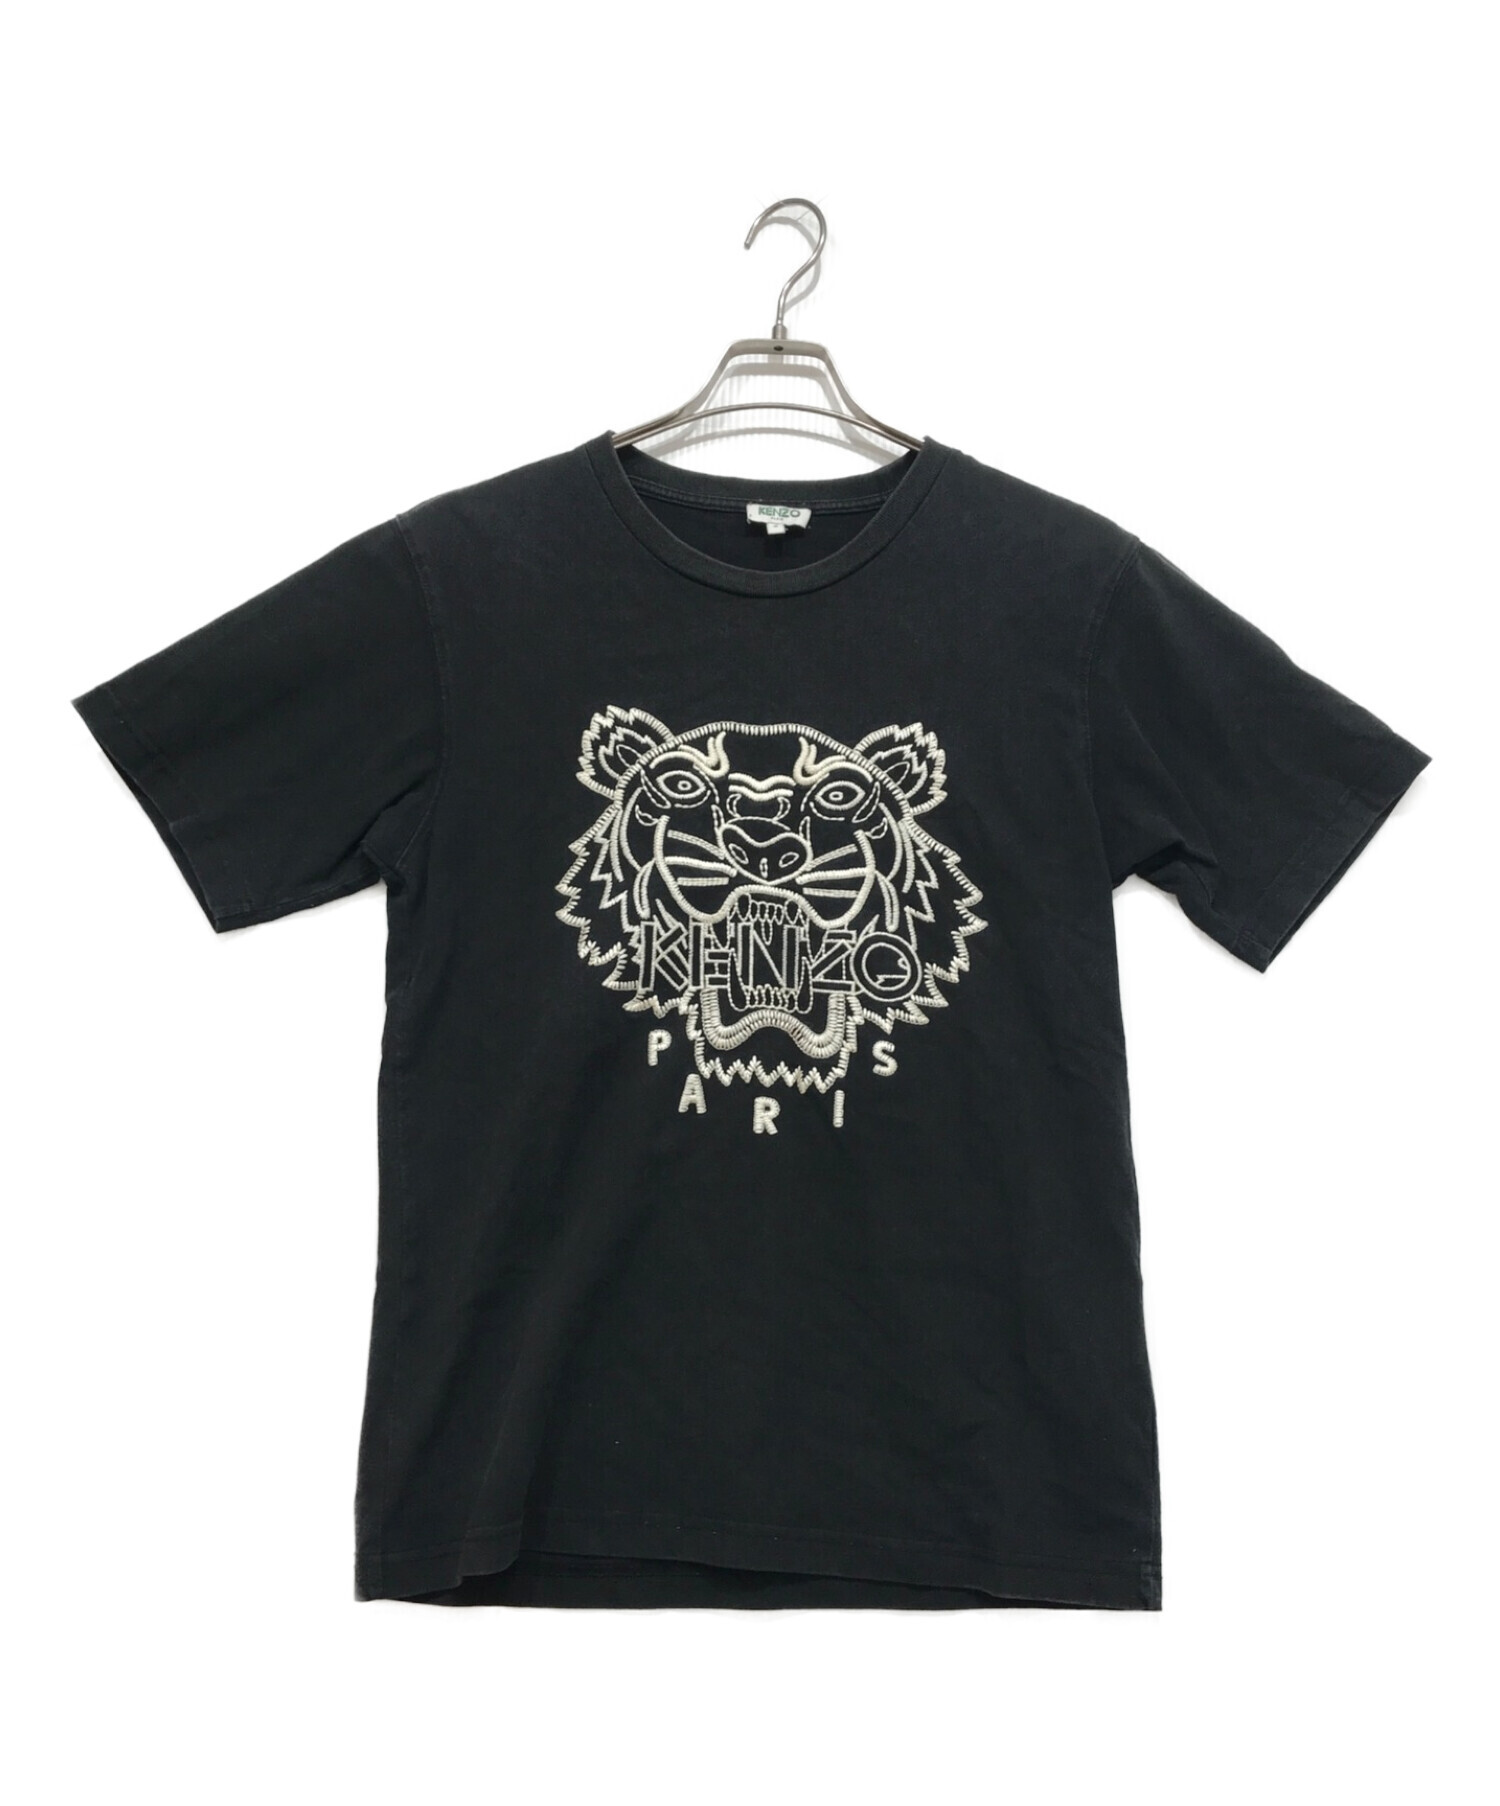 KENZO タイガー刺繍Tシャツ | hartwellspremium.com